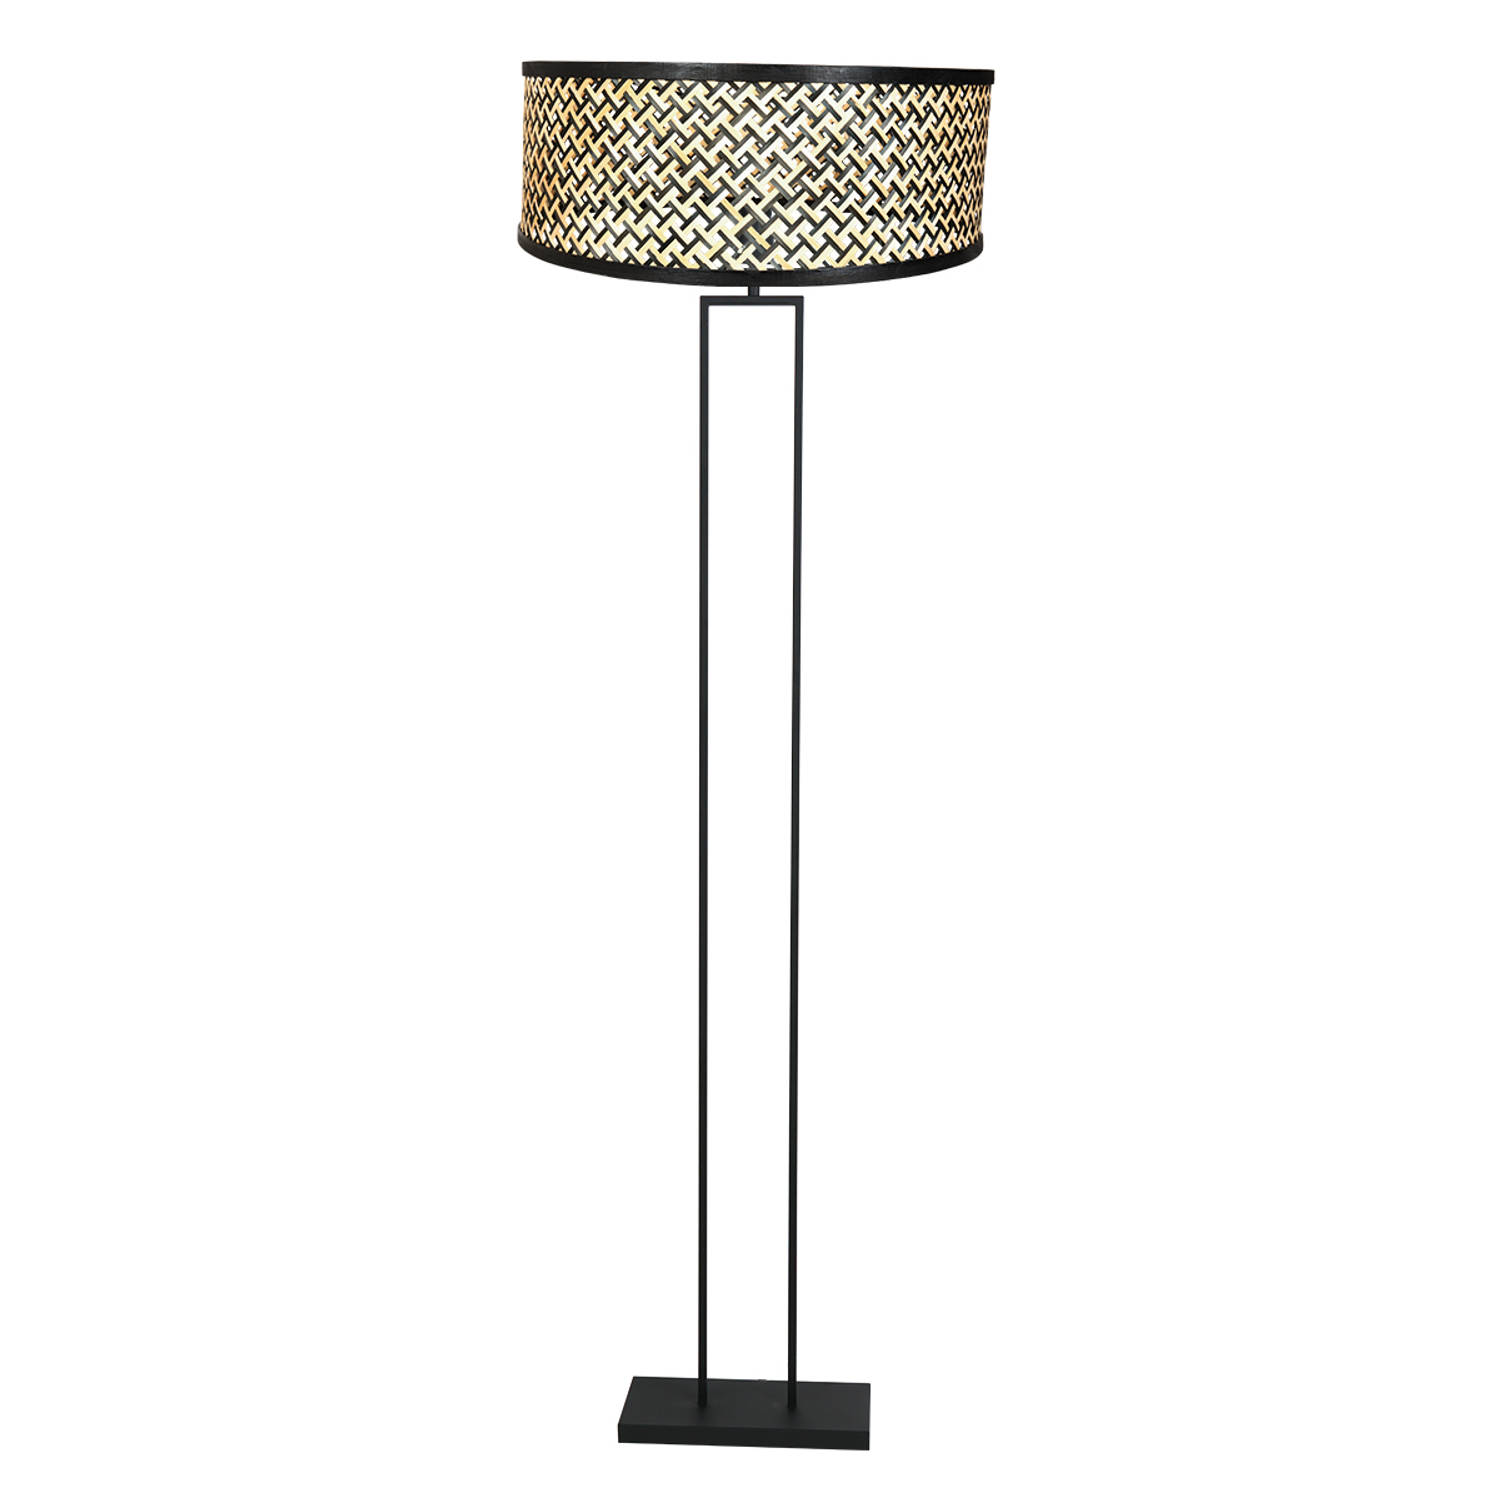 Vloerlamp Stang | 1-lichts | naturel & zwart | E27 fitting | woonkamer / slaapkamer | modern design | leeslamp